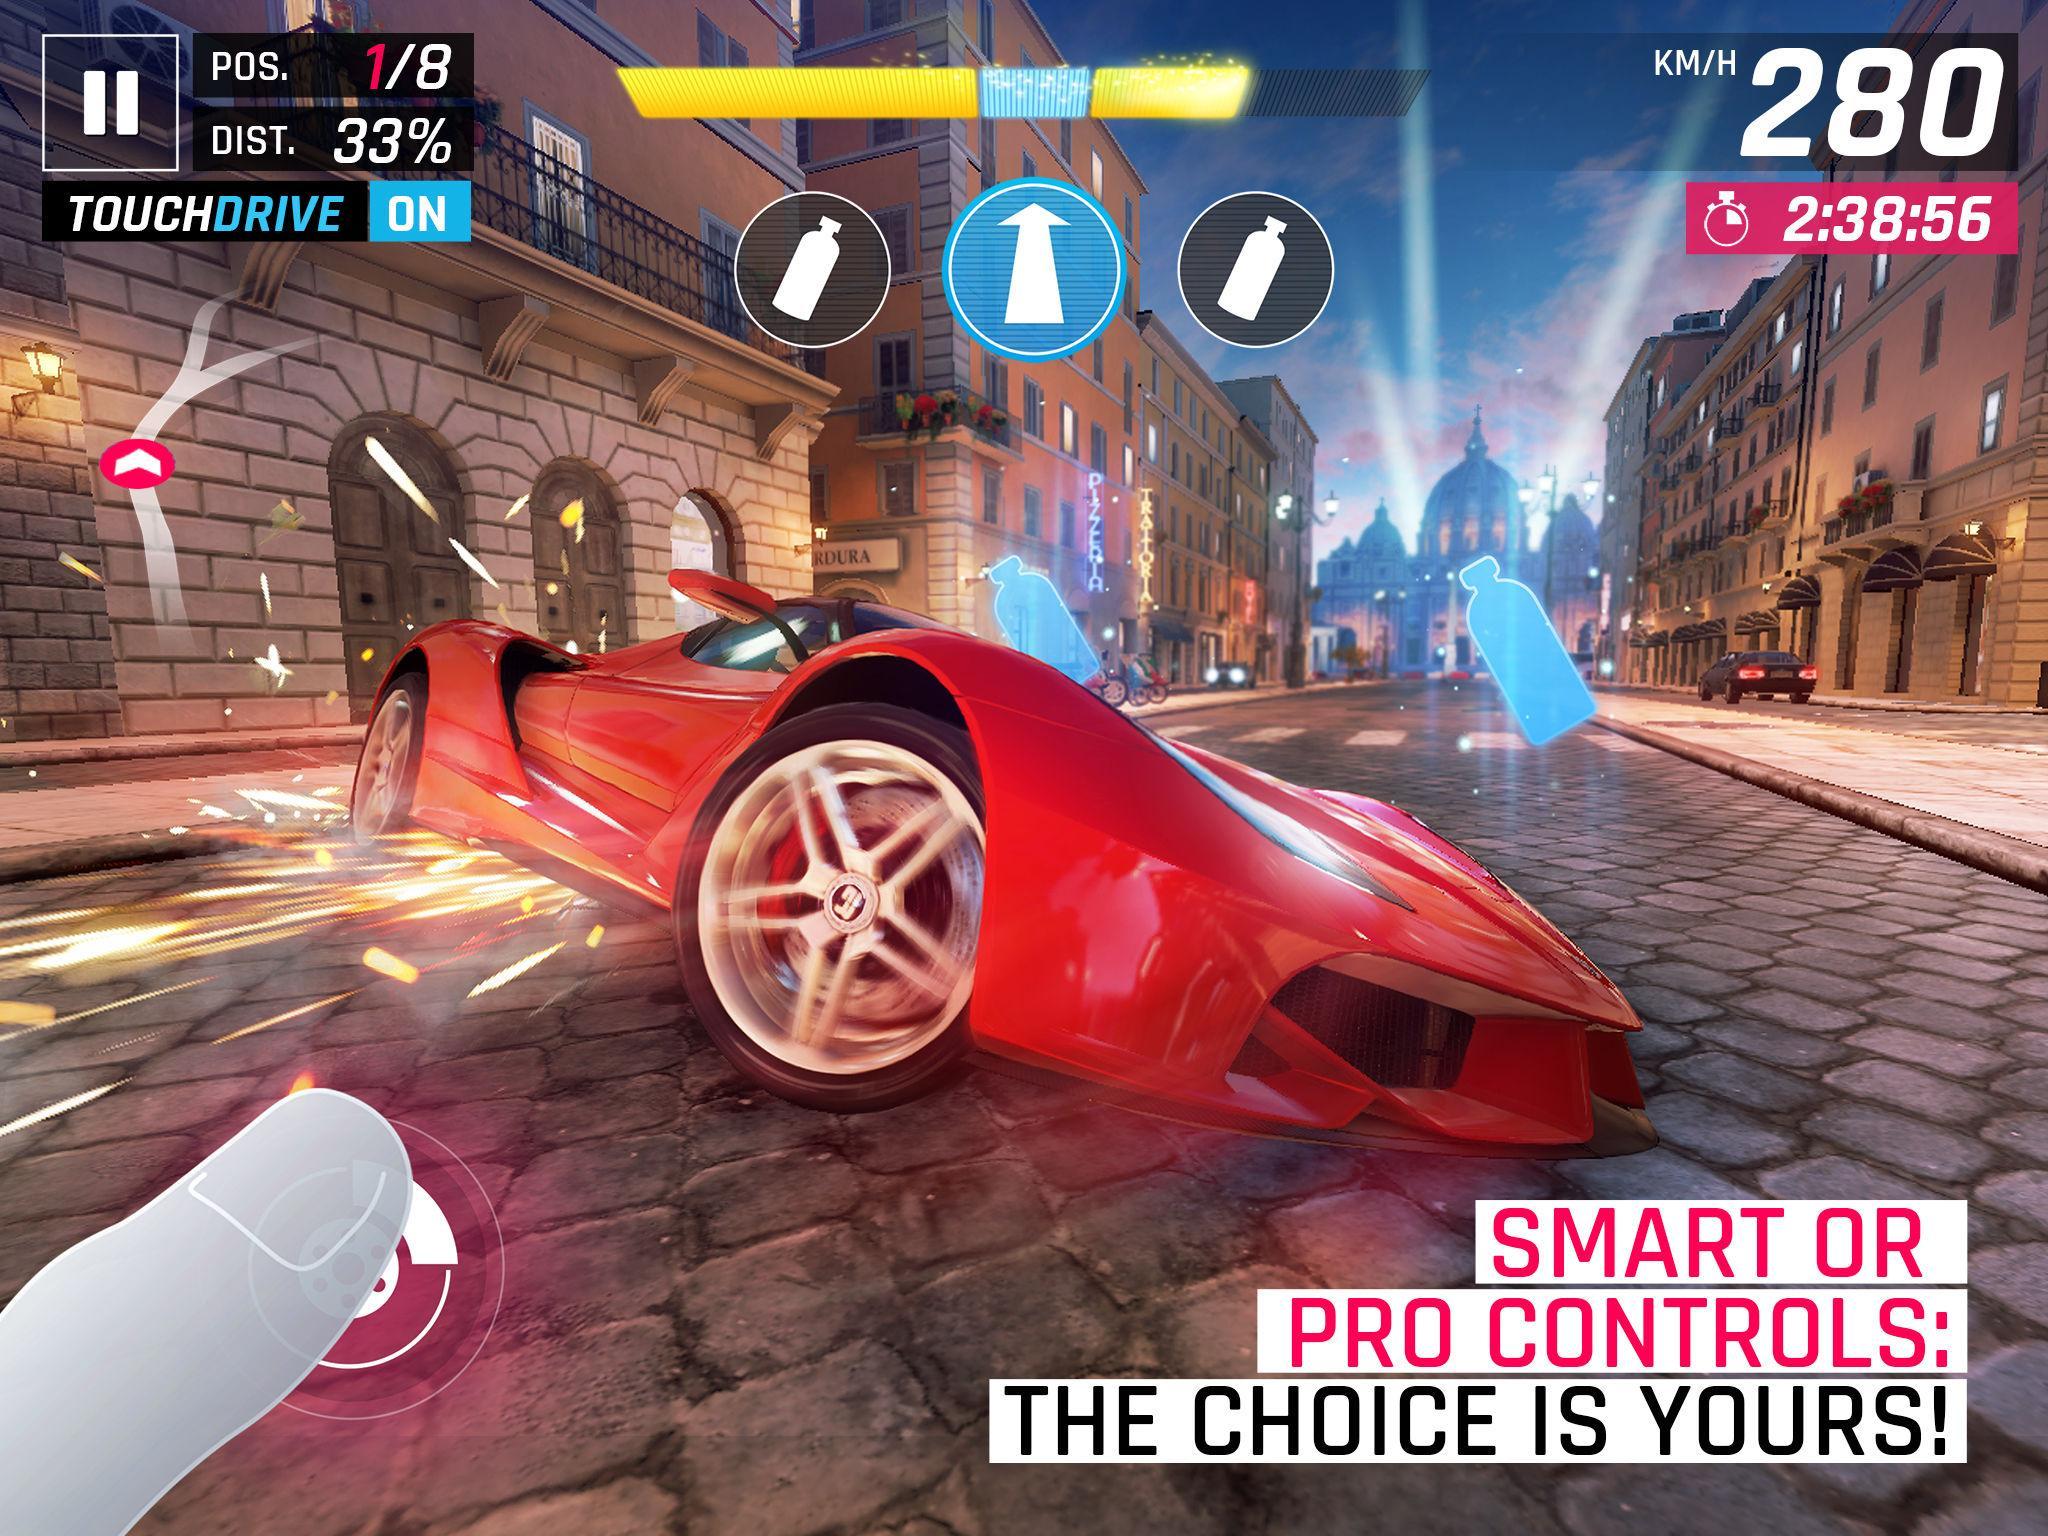 Asphalt 9 Legends - Epic Car Action Racing Game 2.5.3a Screenshot 19